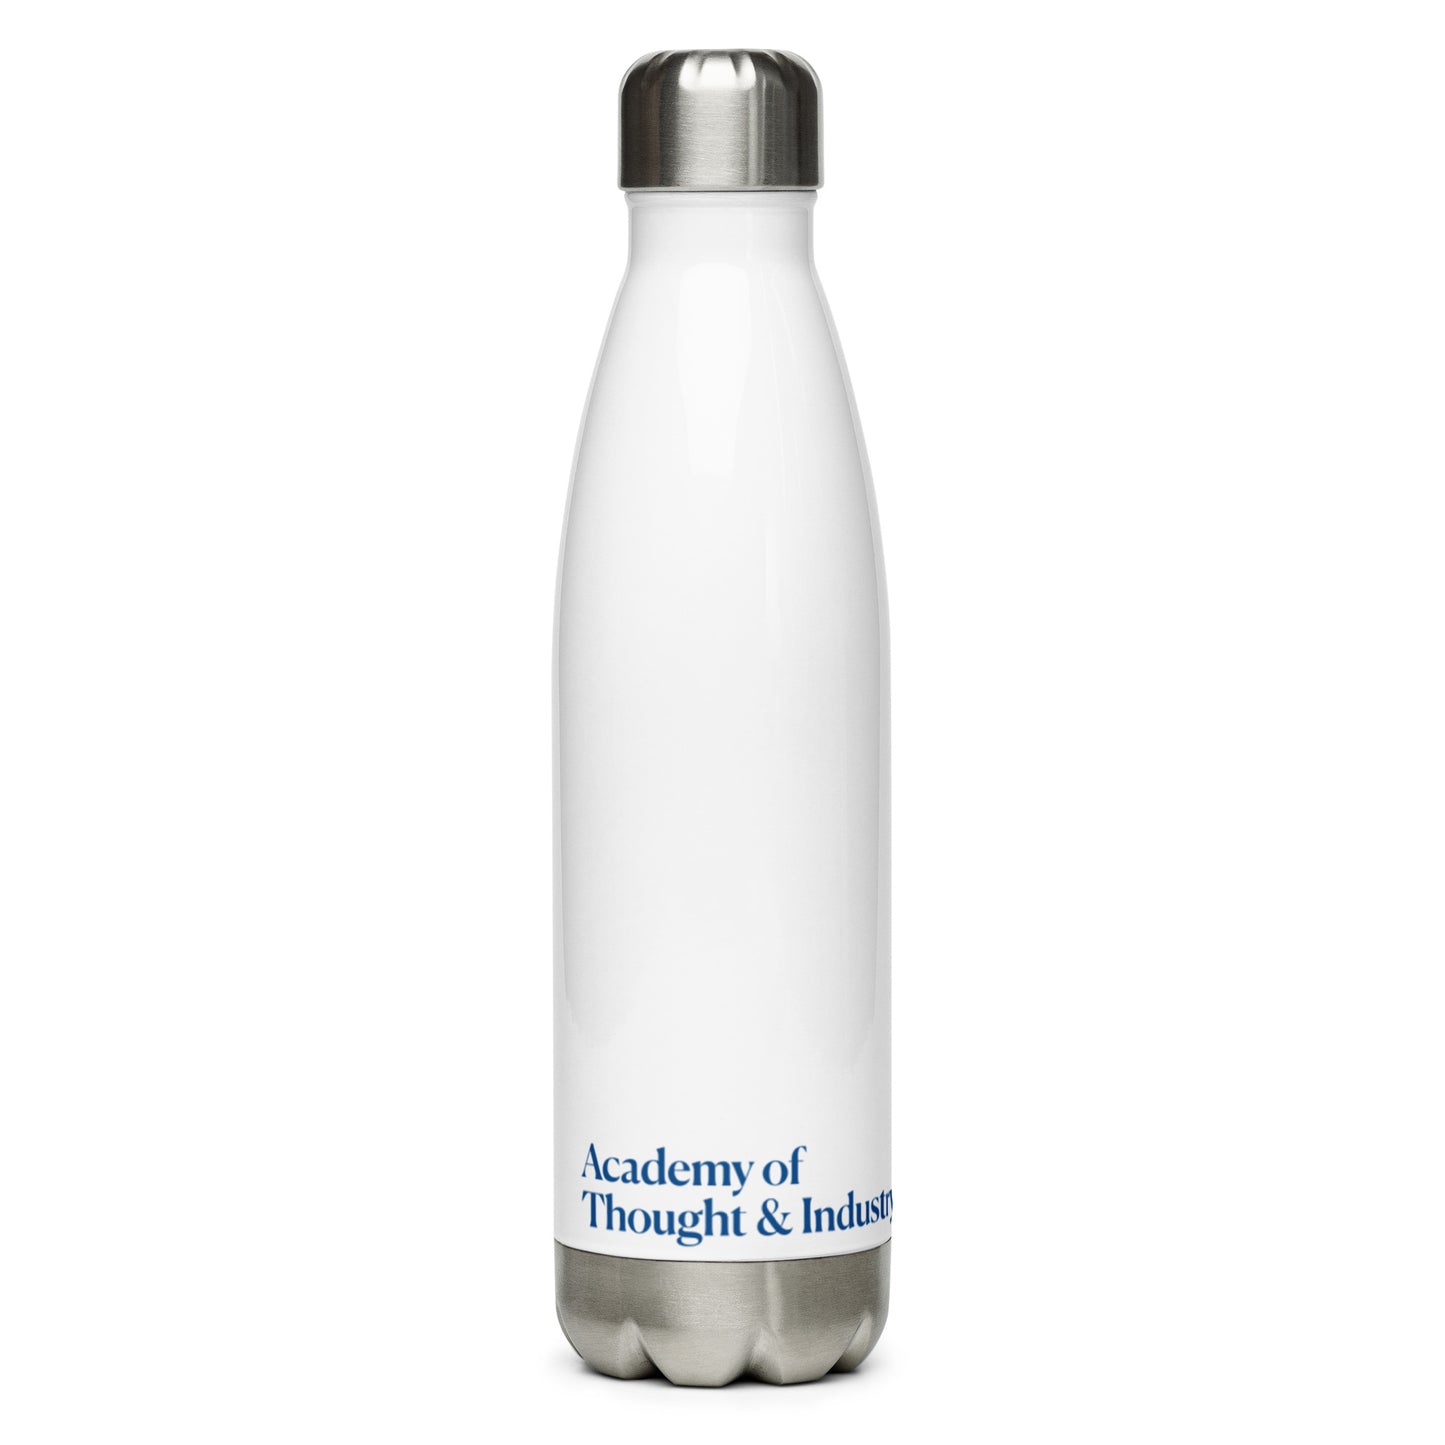 ATI Stainless Steel Water Bottle